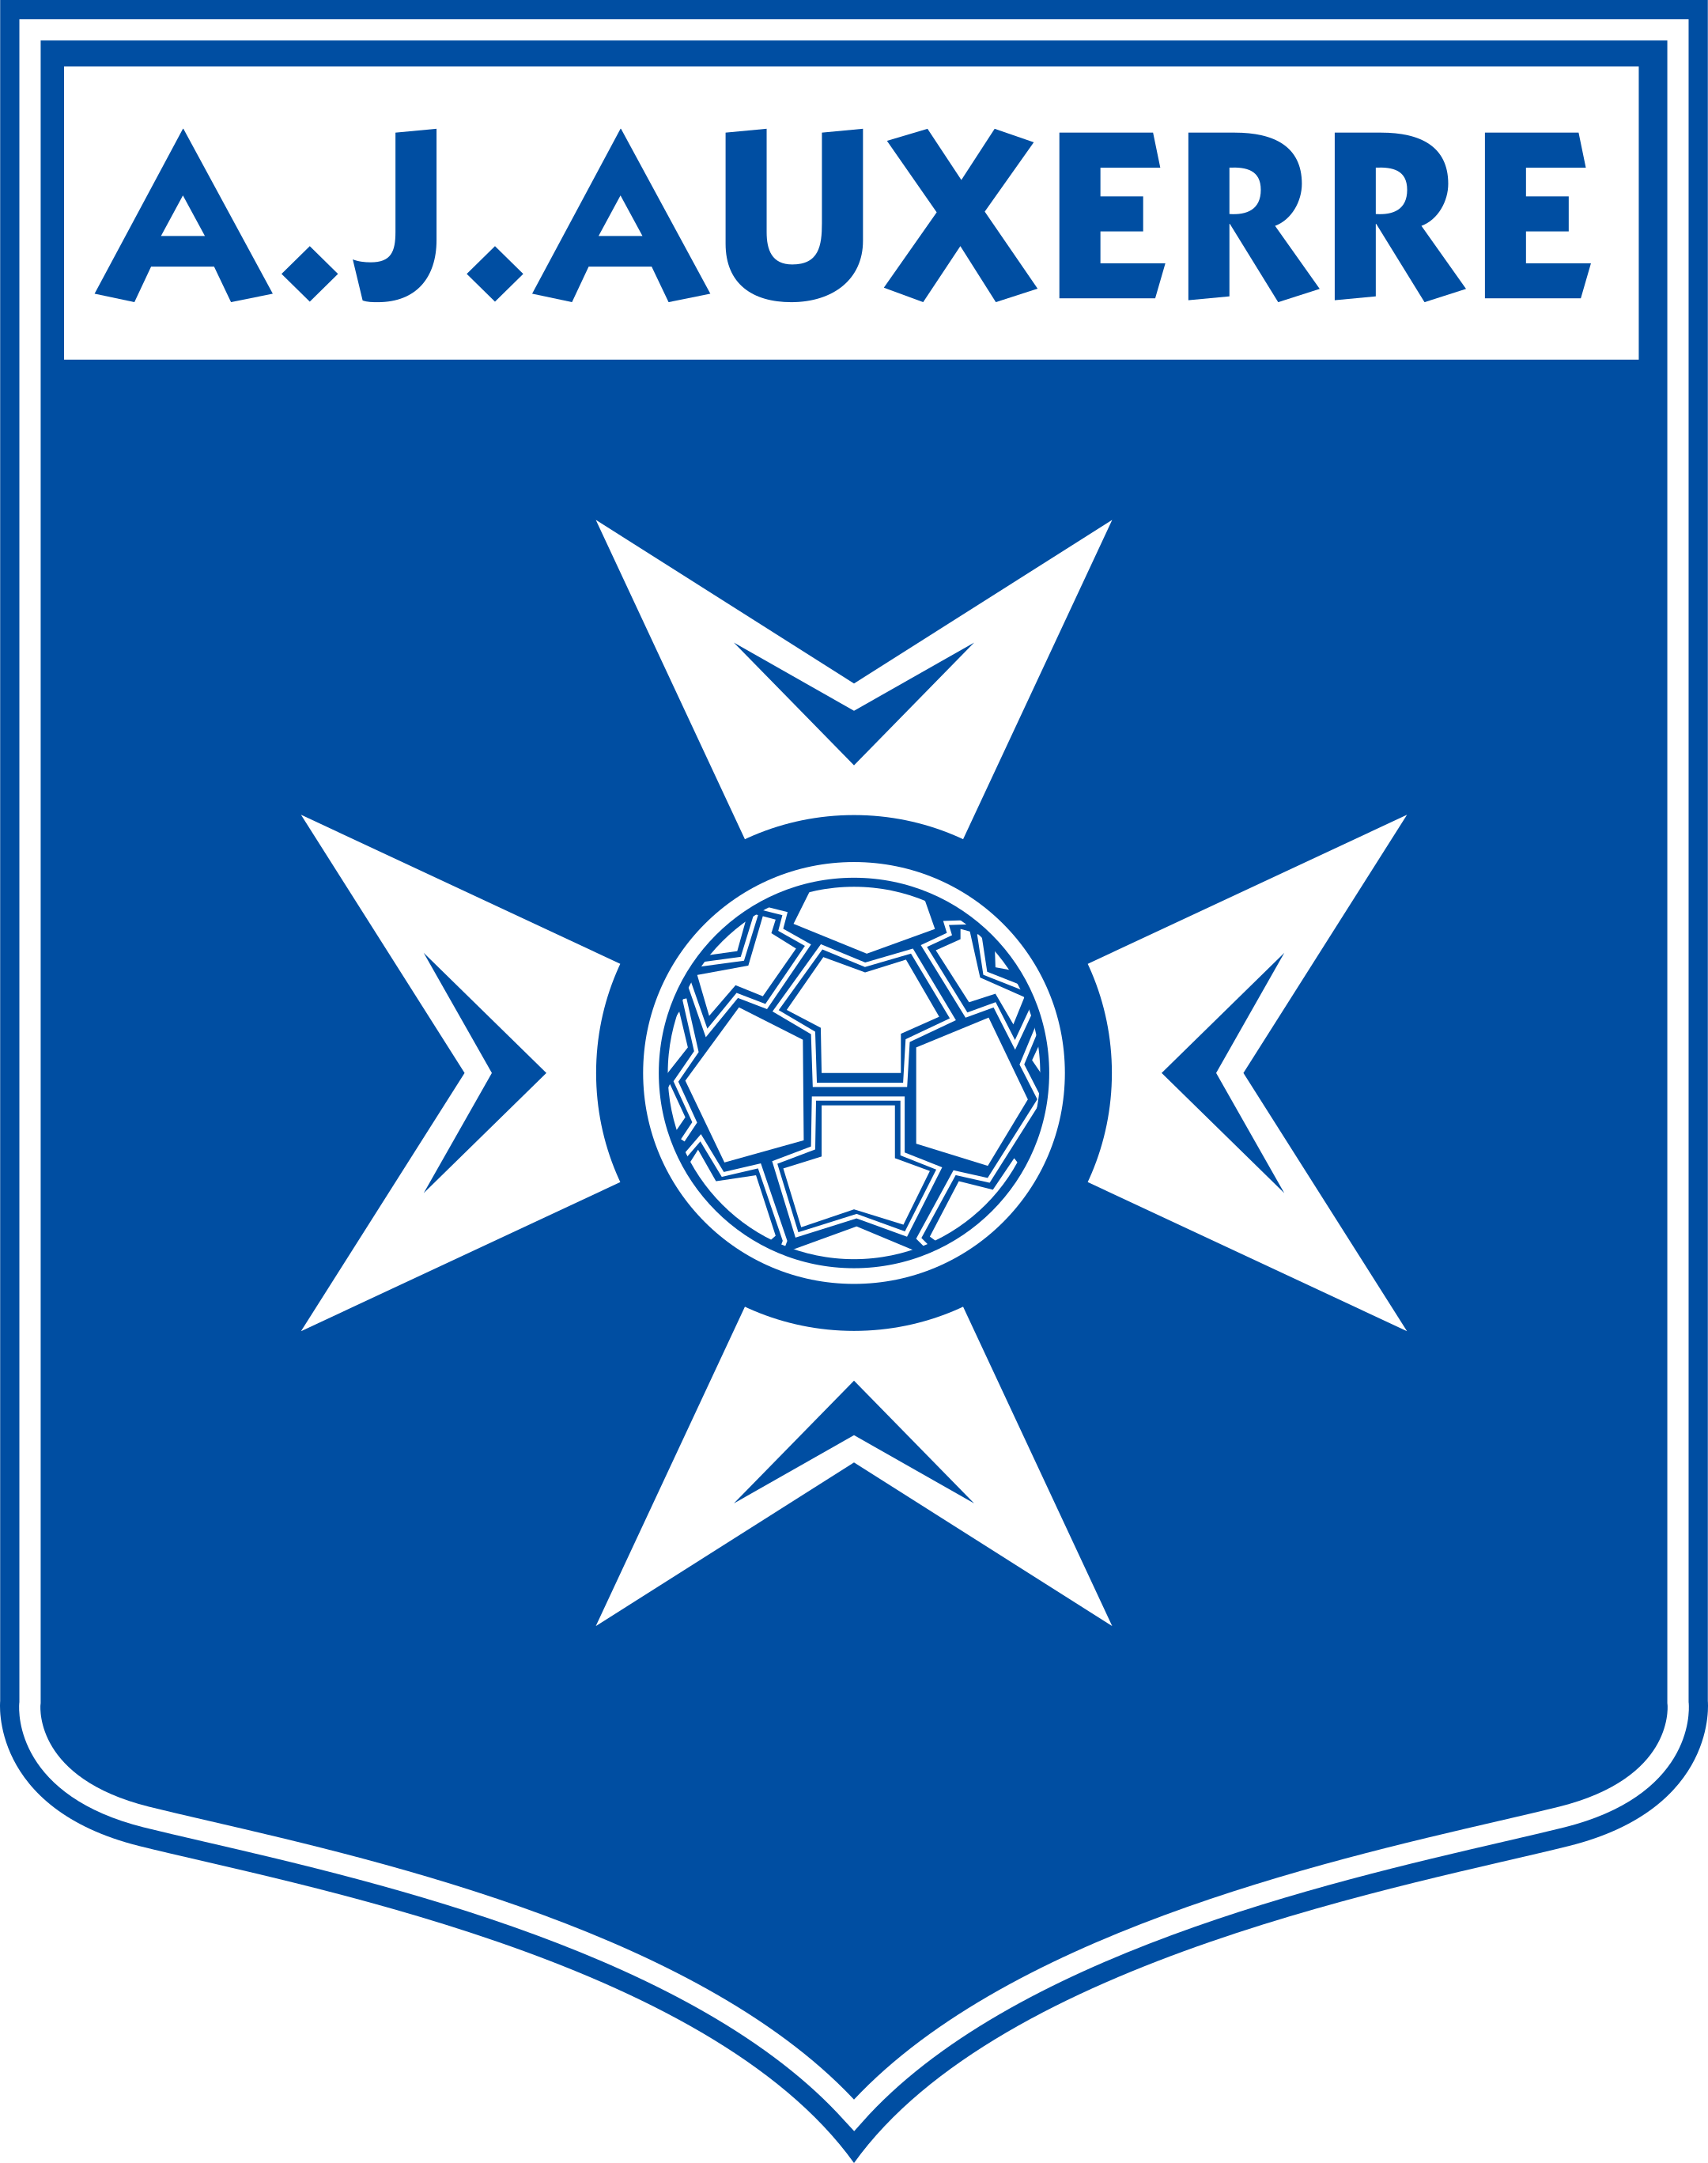 aj auxerre logo 1 - AJ Auxerre Logo